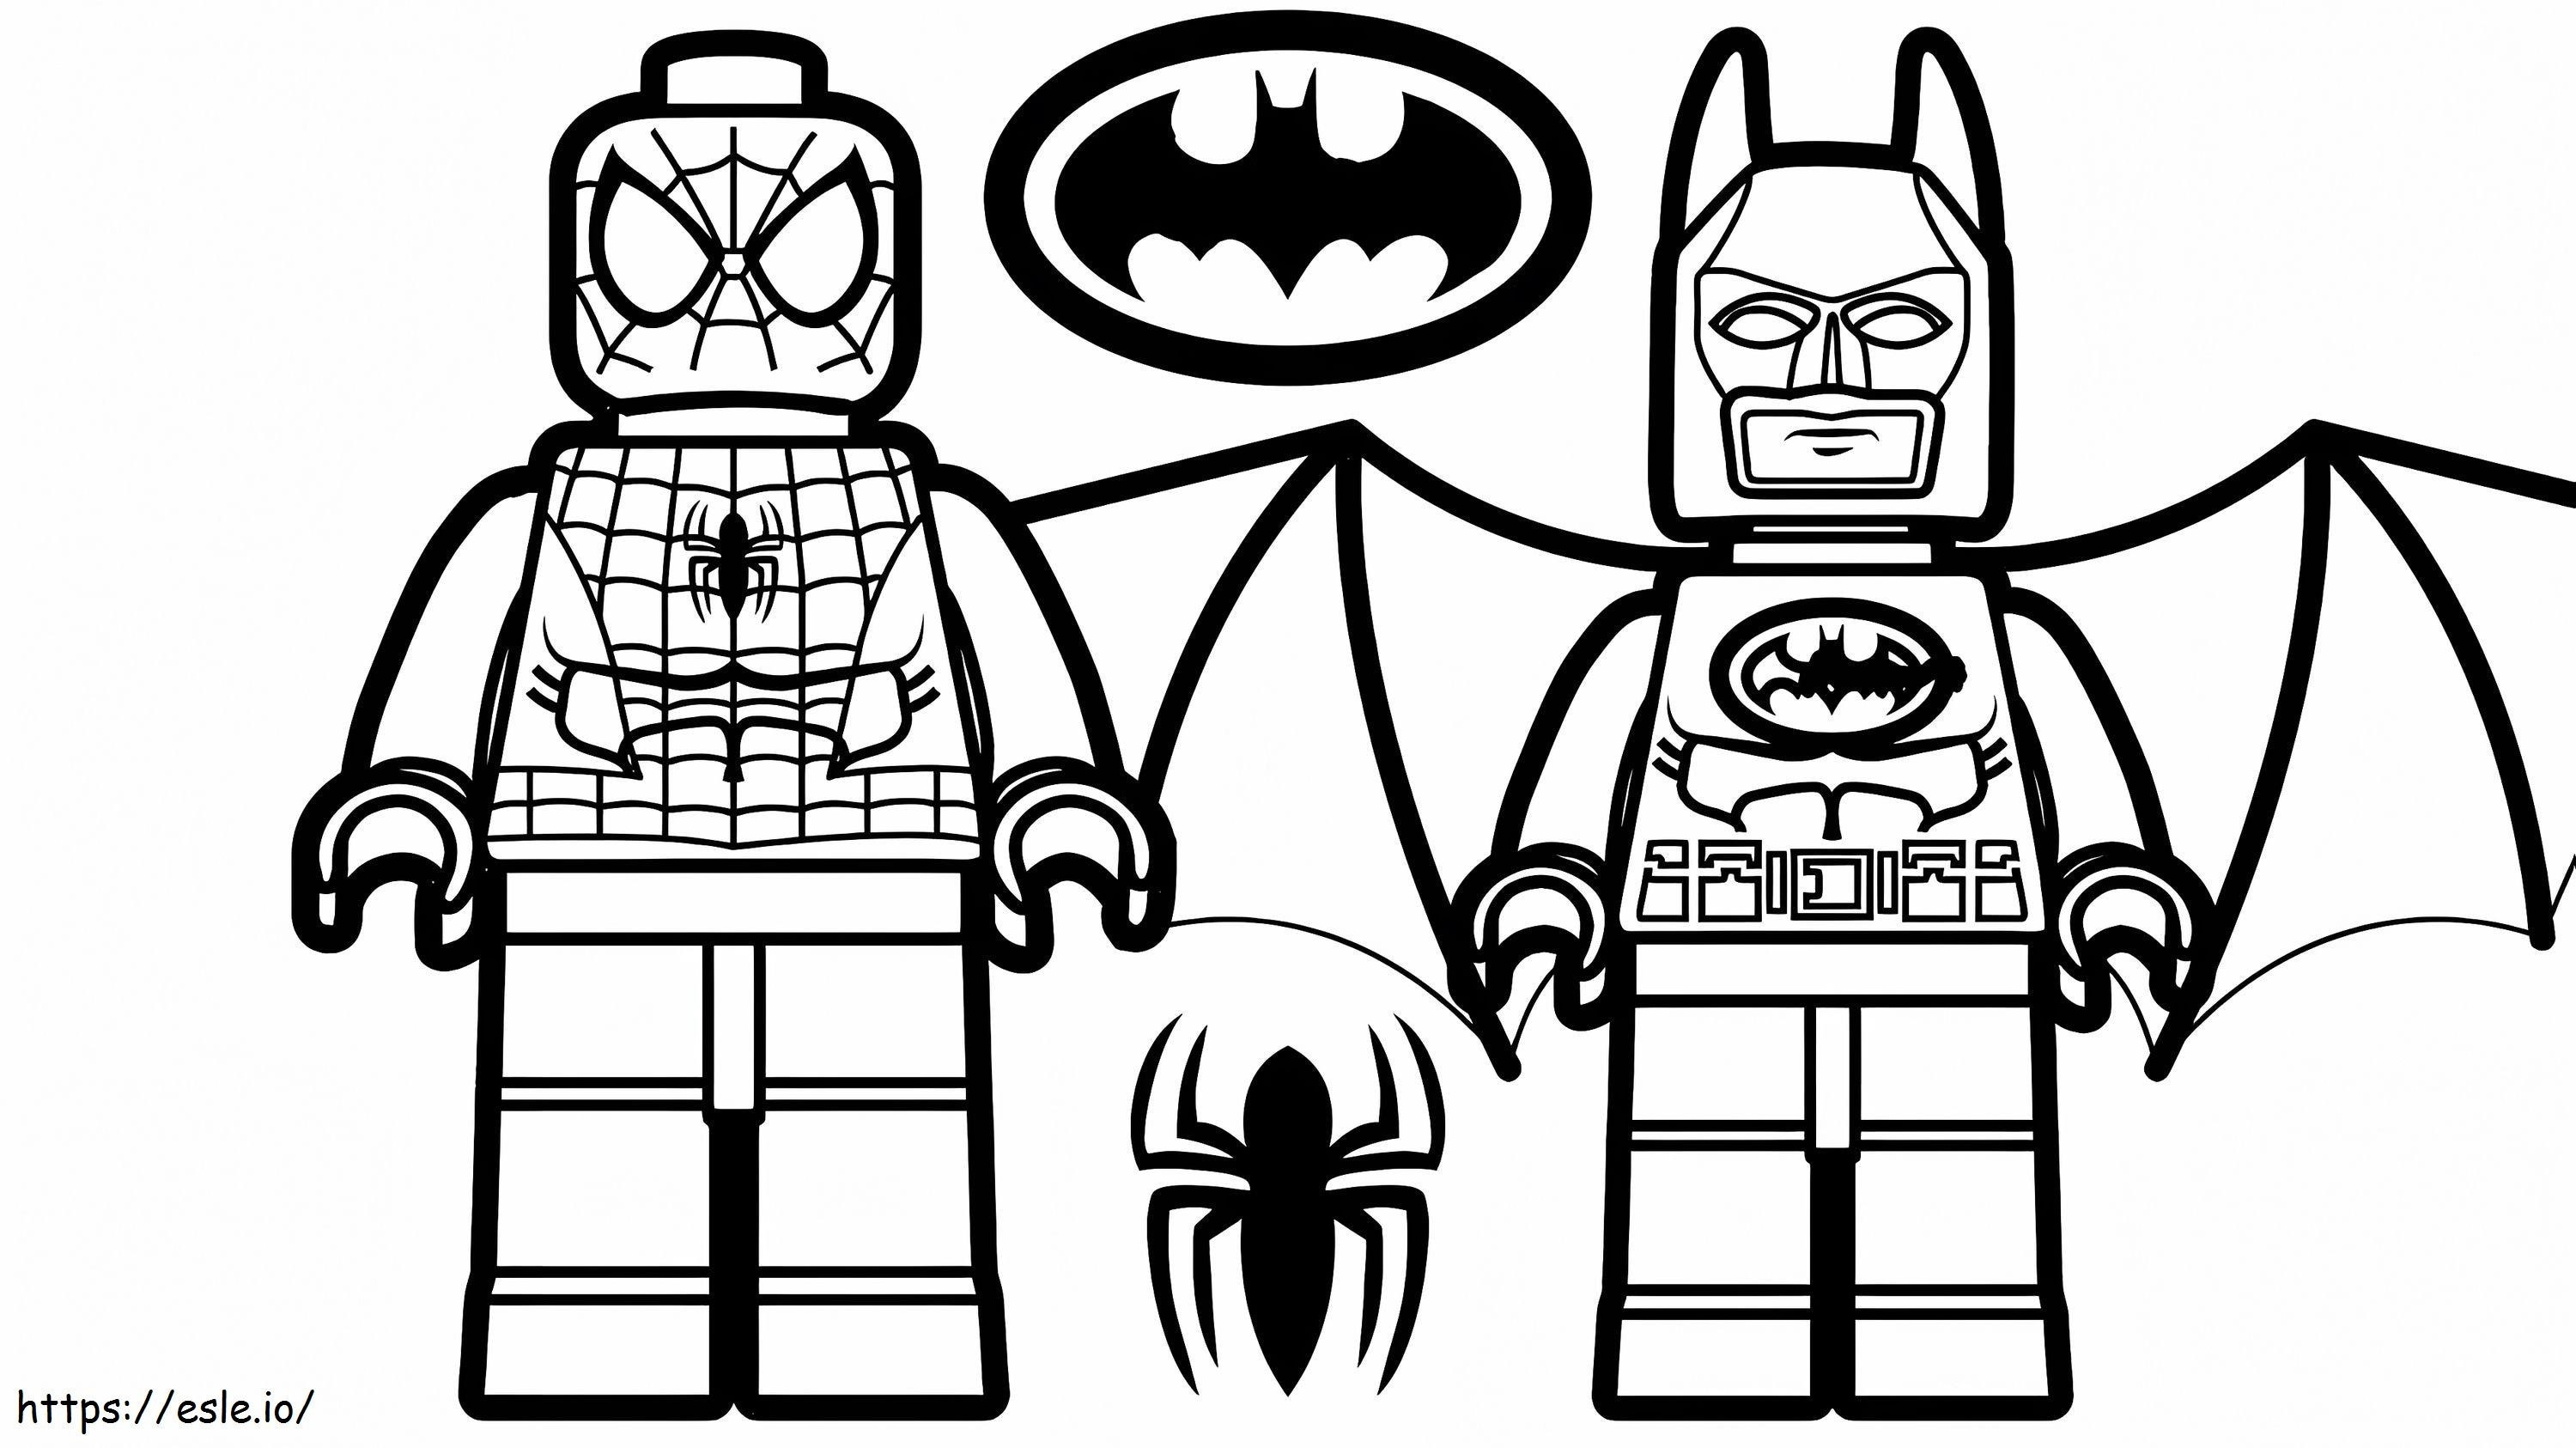 1532141570 Lego Spiderman und Lego Batman A4 E1600348956736 ausmalbilder